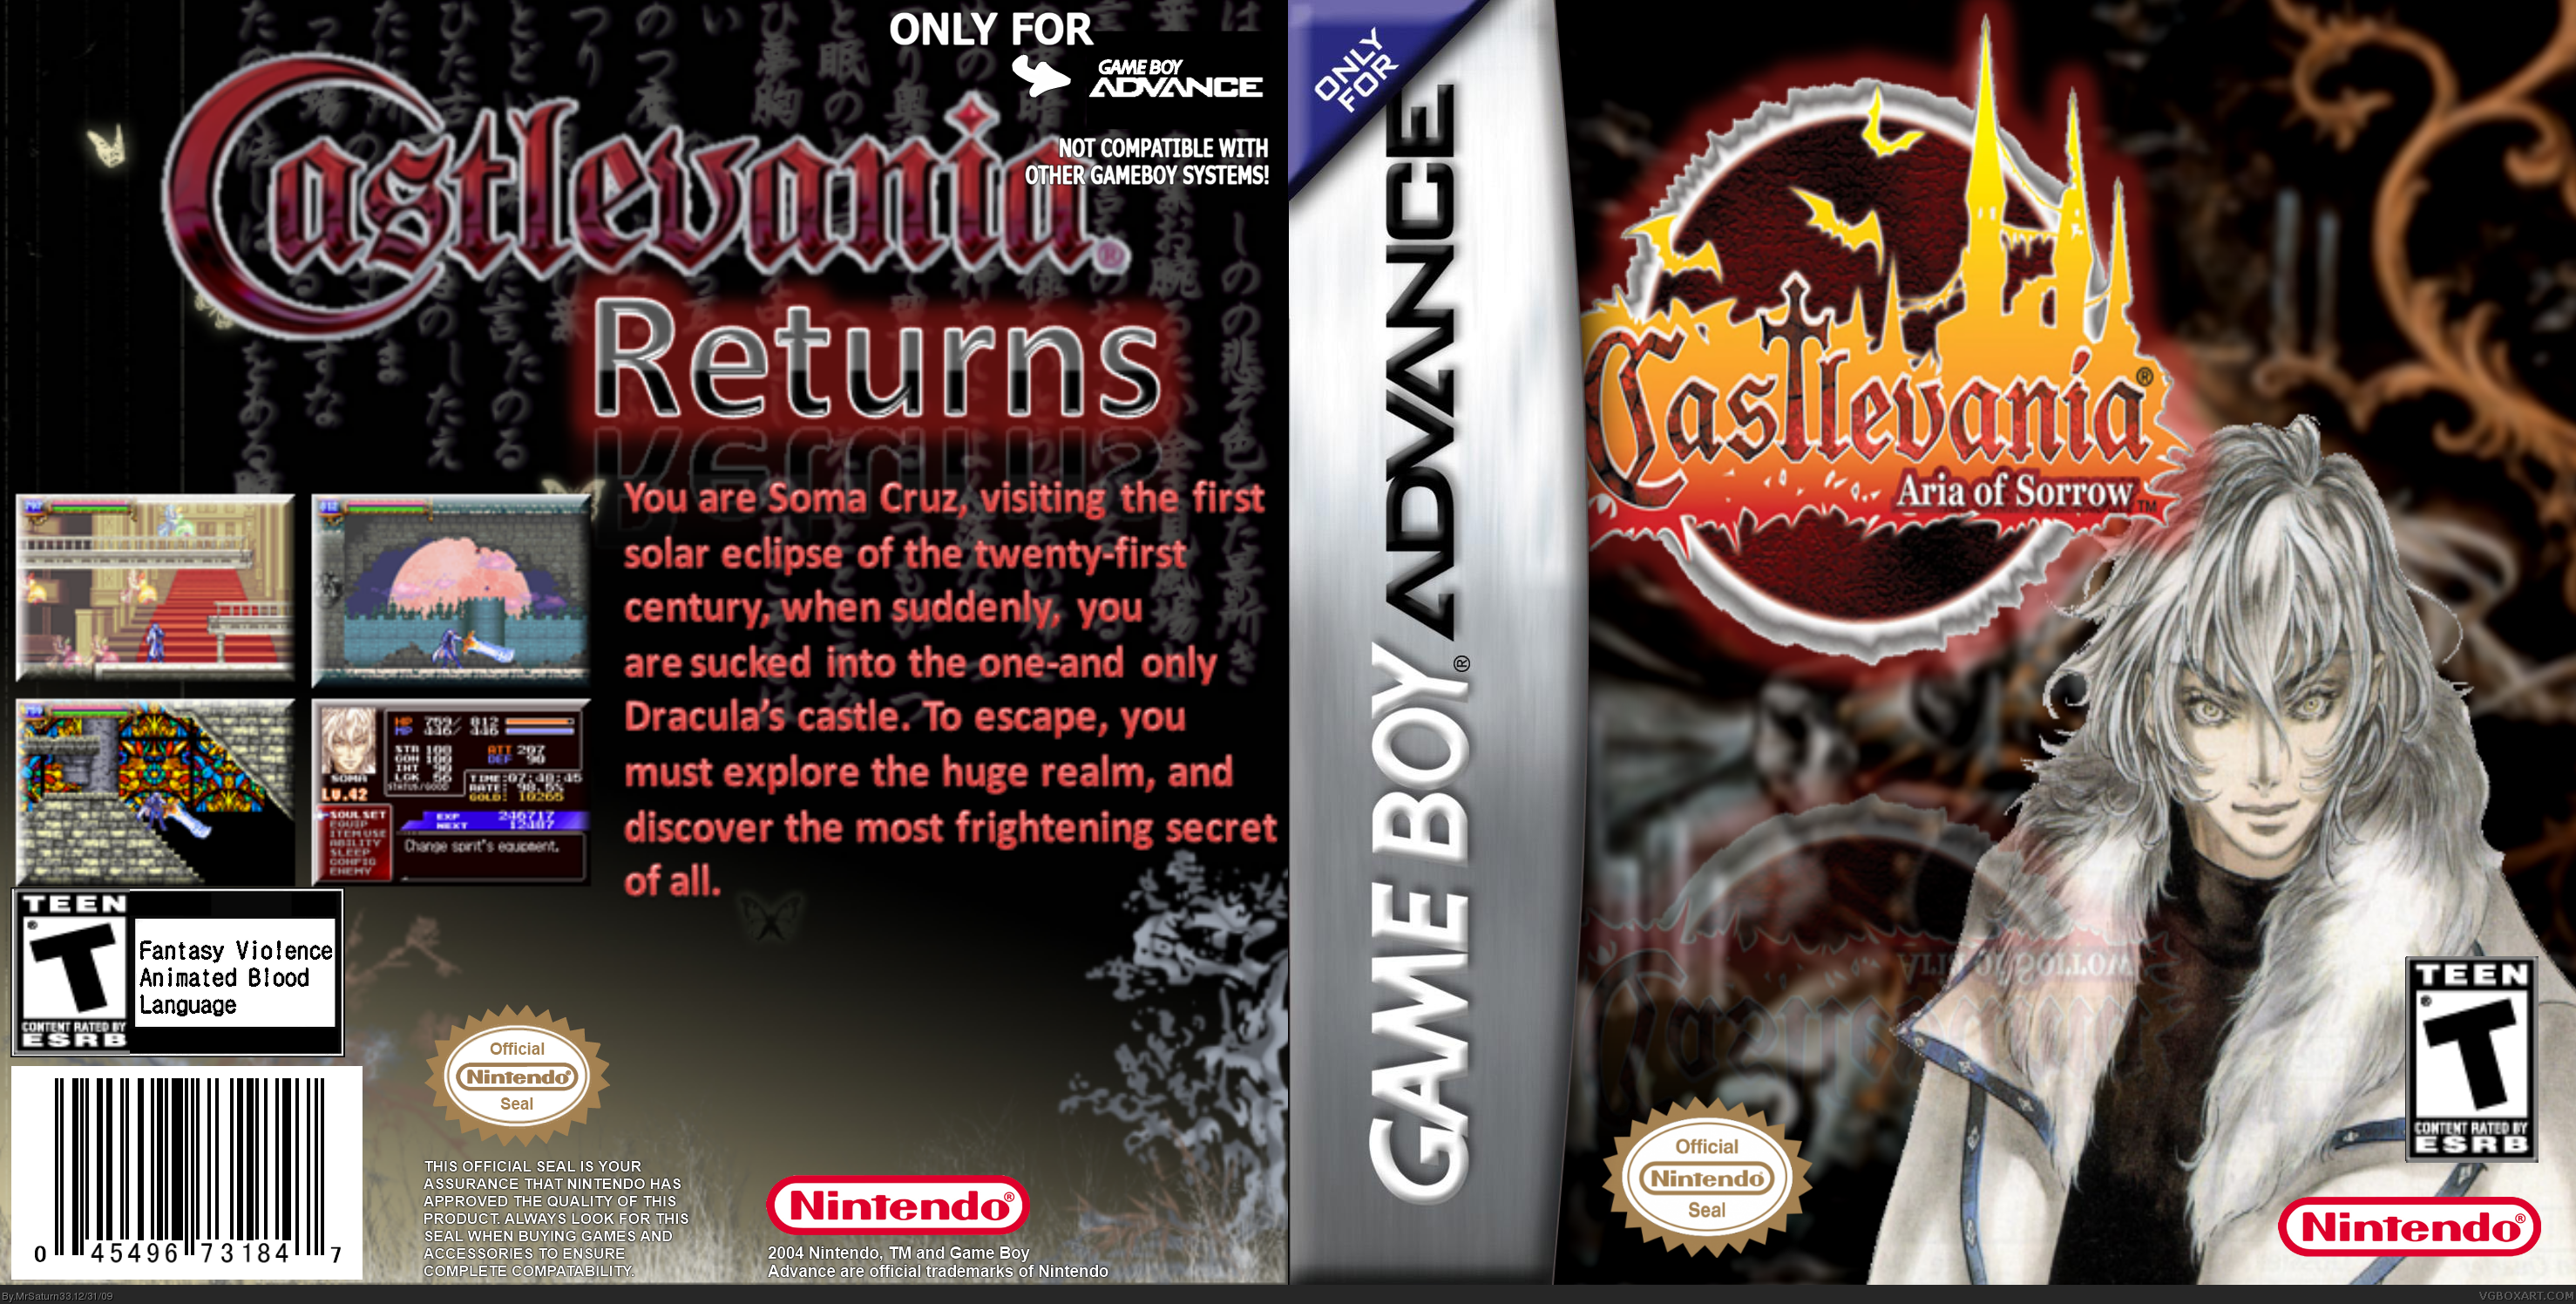 Castlevania: Aria of Sorrow box cover